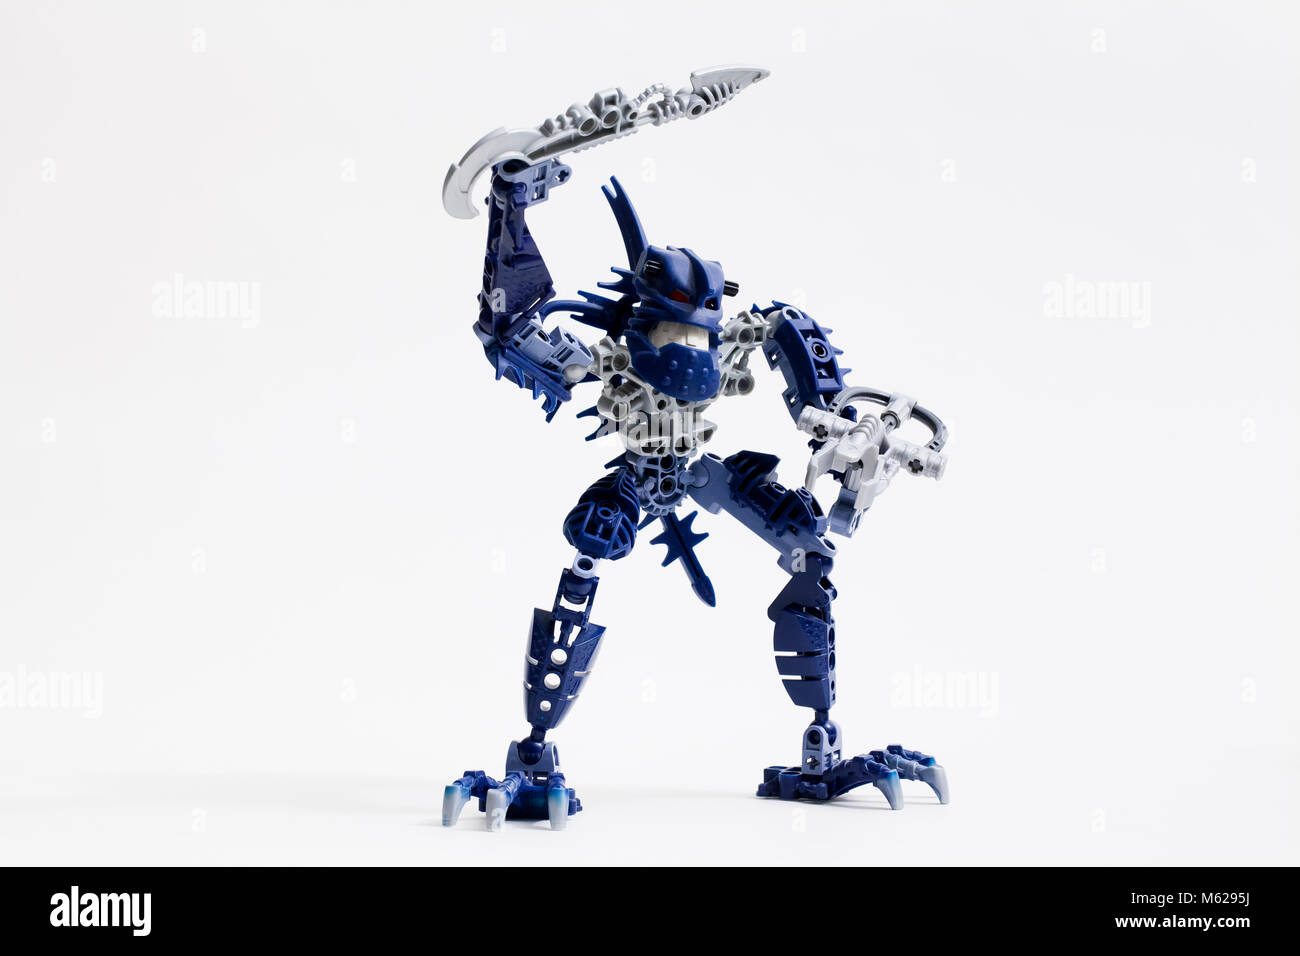 LEGO Bionicle action figure - USA Stock Photo